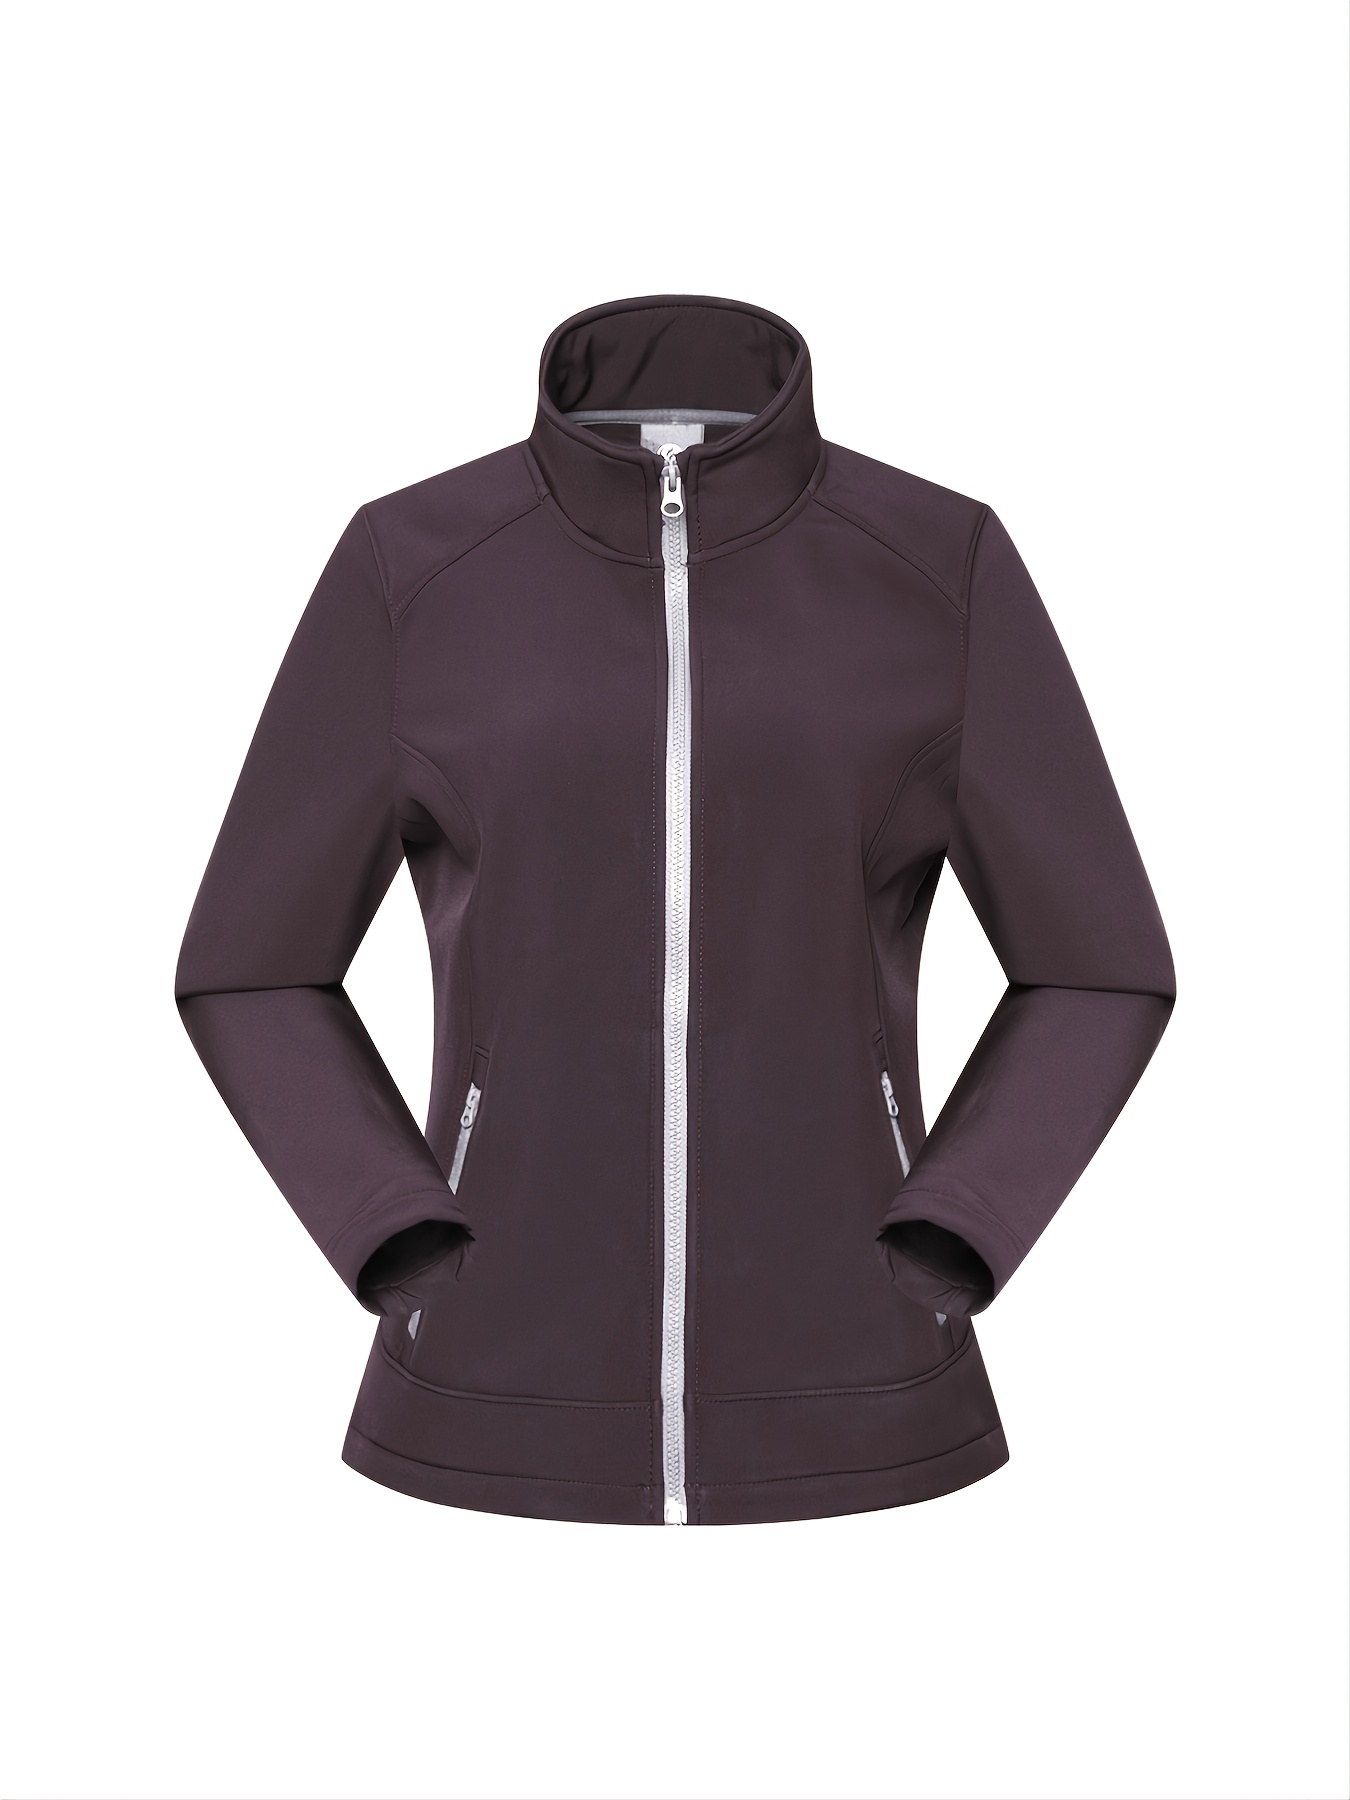 Soft-Shell Jacket, Windproof & Waterproof Stand Collar Jacket Outdoor  Fishing Hiking Jacket, Women's Outerwear